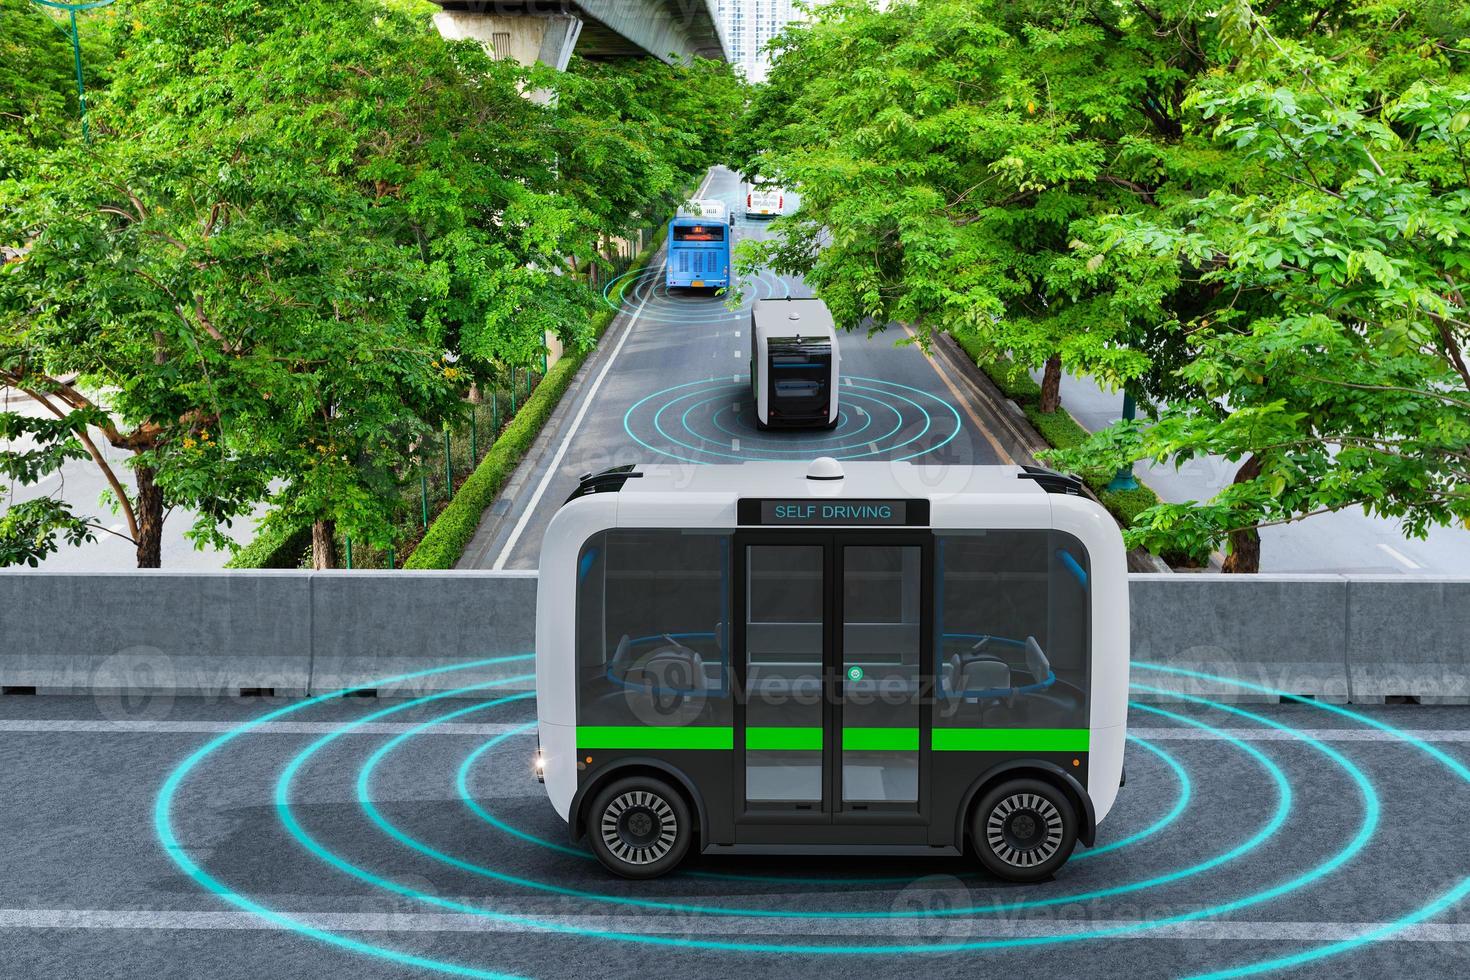 autonome elektrische shuttlebus die zelf over de groene stadsweg rijdt, slim voertuigconcept foto